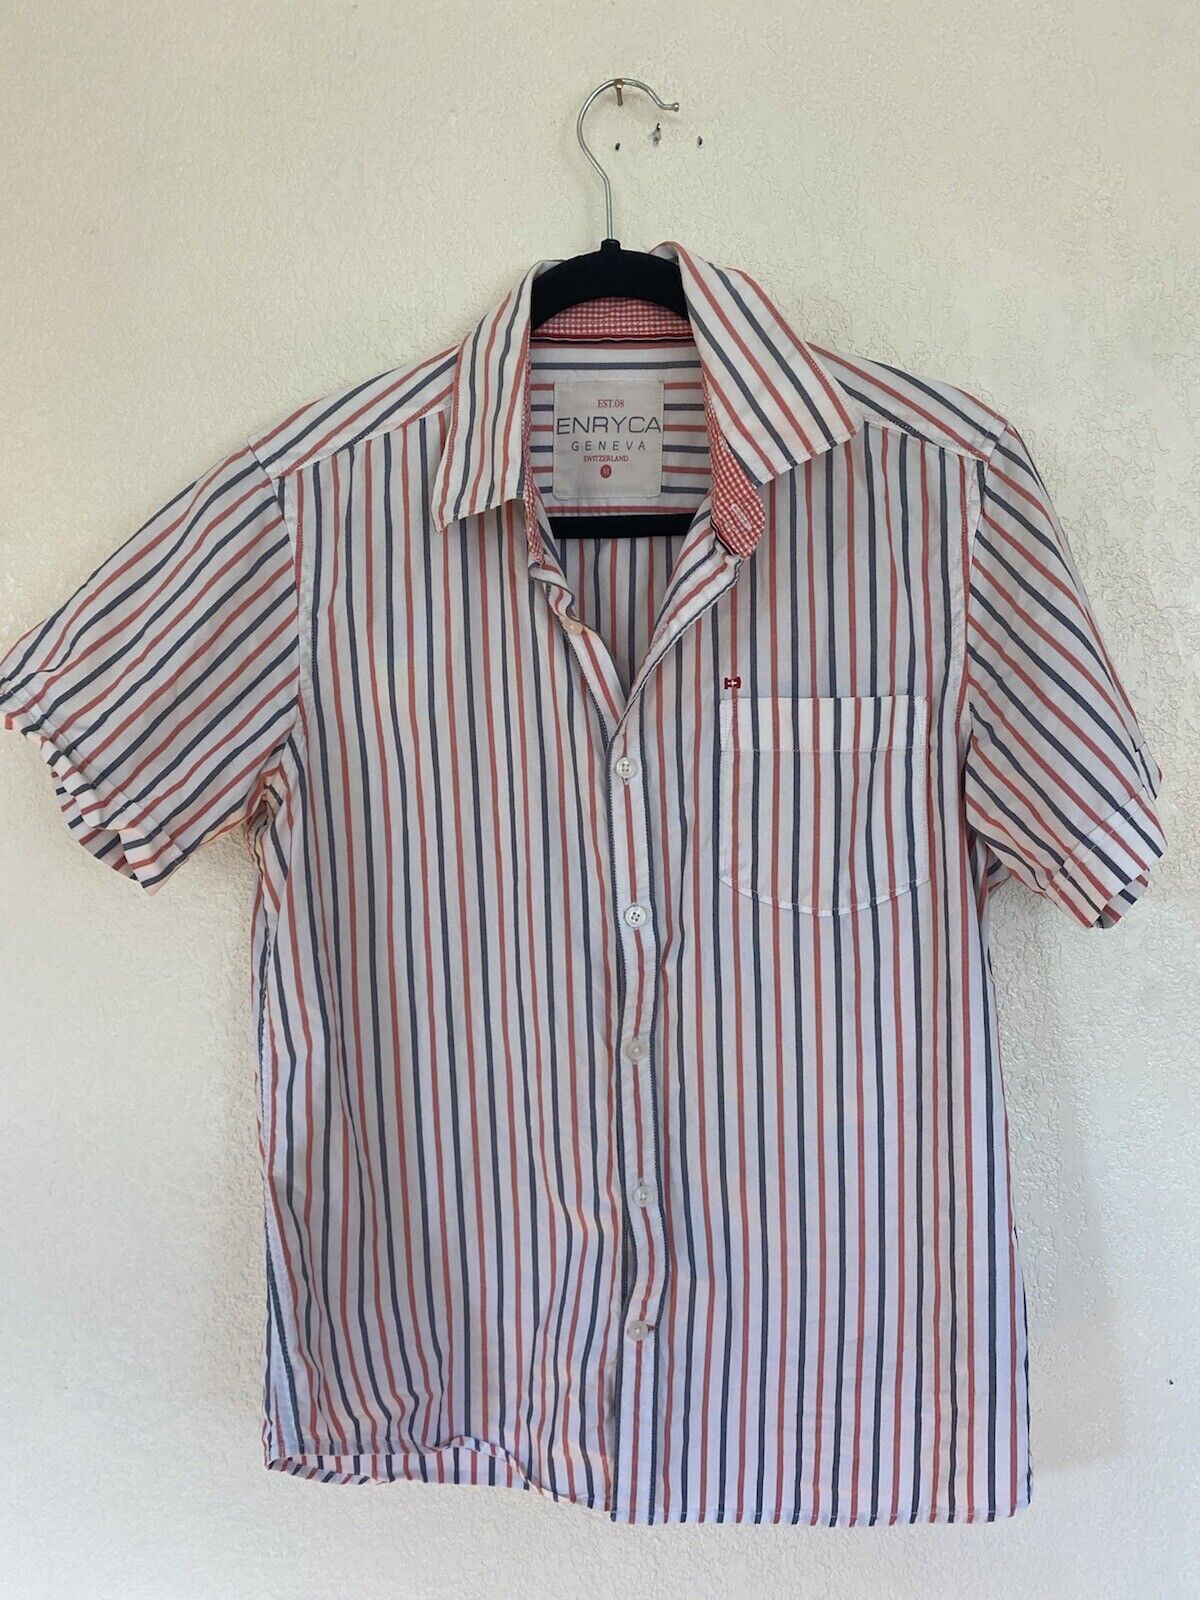 Striped Button Down Shirt - Enryca - Men's Medium # 2211